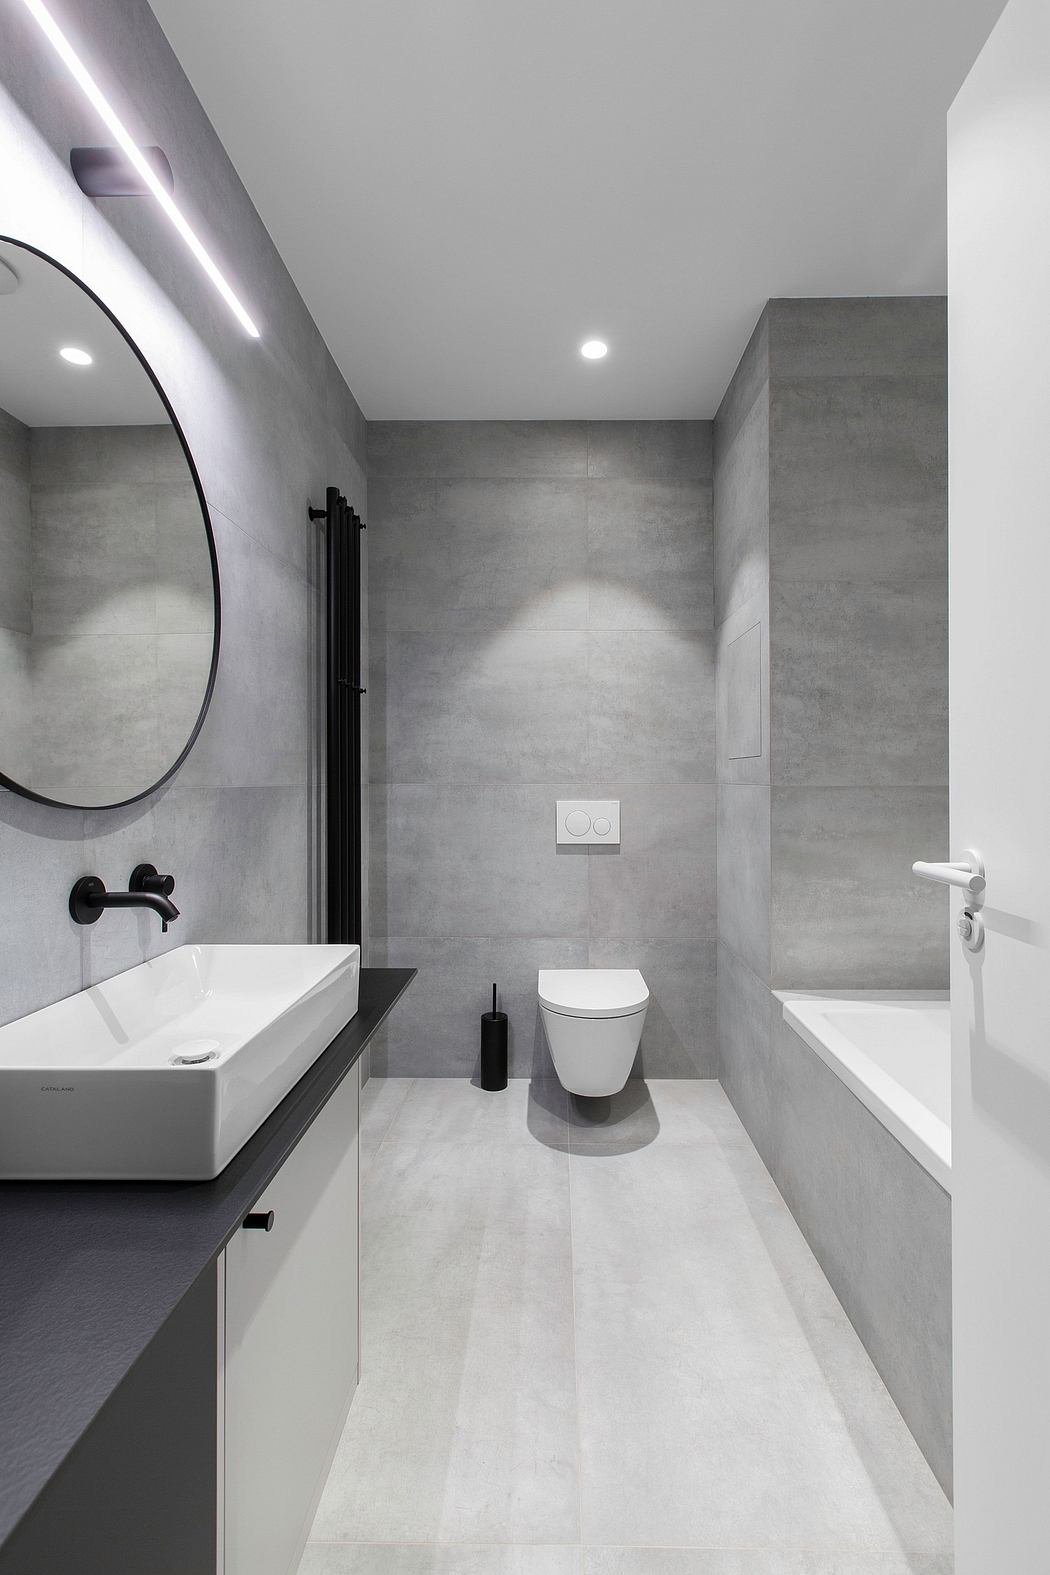 A modern, minimalist bathroom featuring sleek gray tile, a round mirror, and black fixtures.